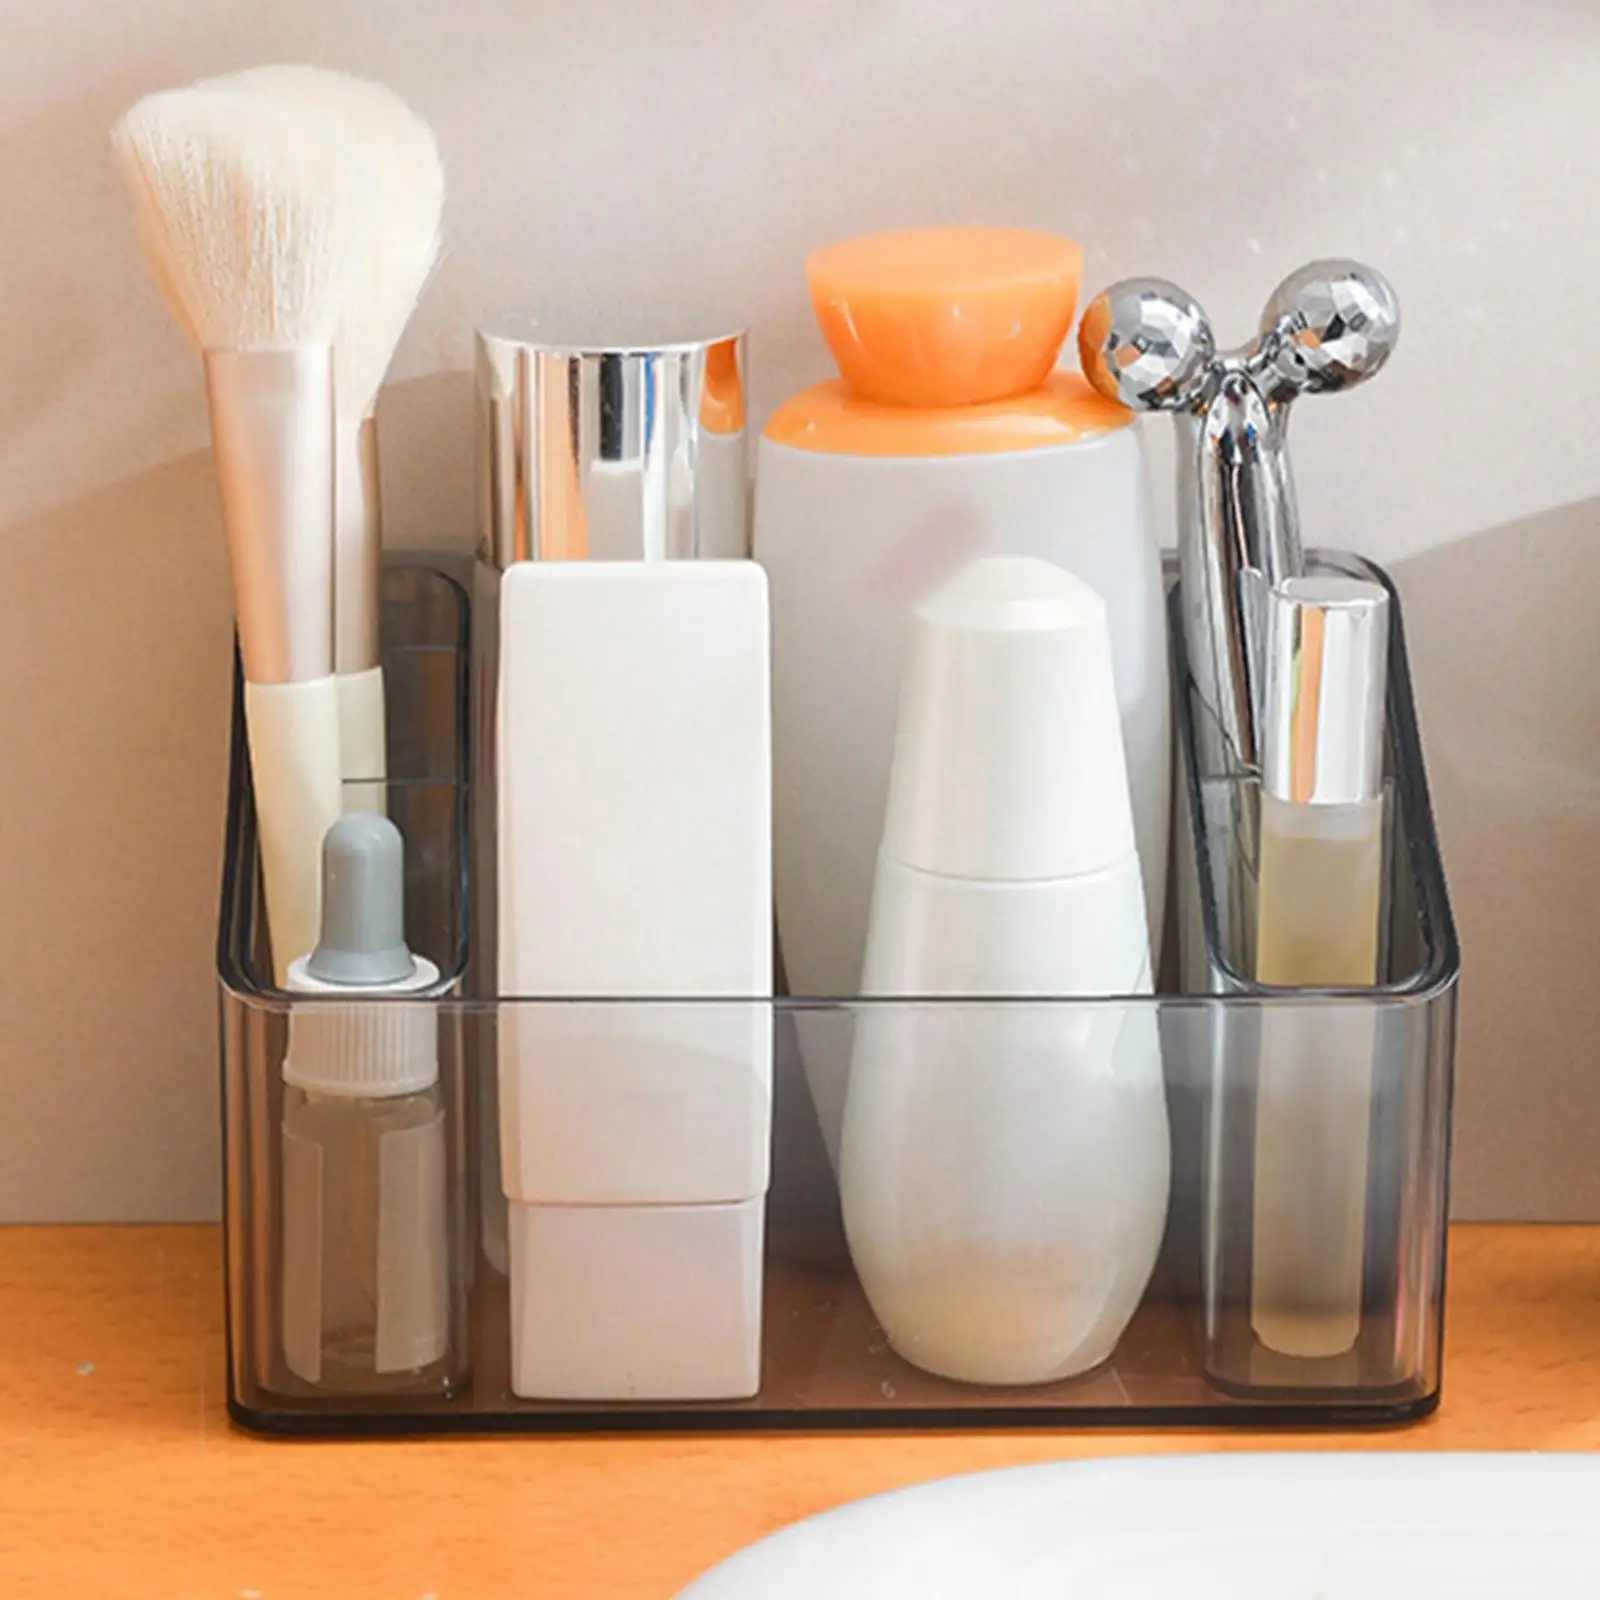 Portable Cosmetic Display Case Office Supplies Organizer Desk Makeup Holder for Skincare Nail Polish Lipsticks Cosmetics Vanity